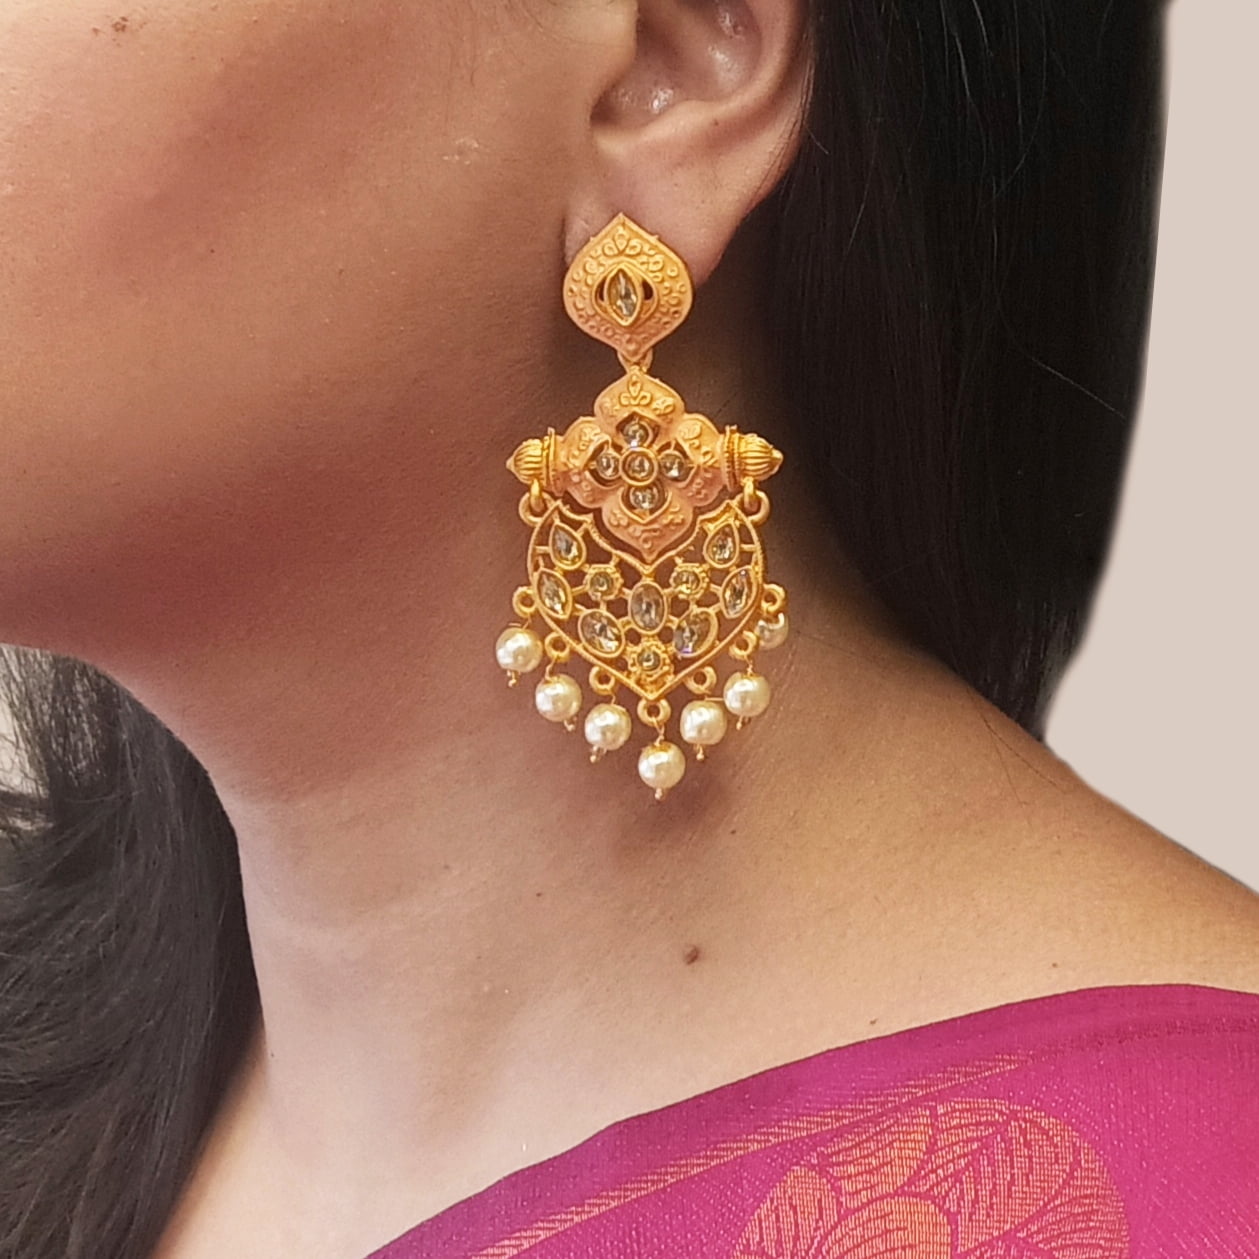 Gold Indian Large Jhumka Round Earrings Pair – HandTstudio